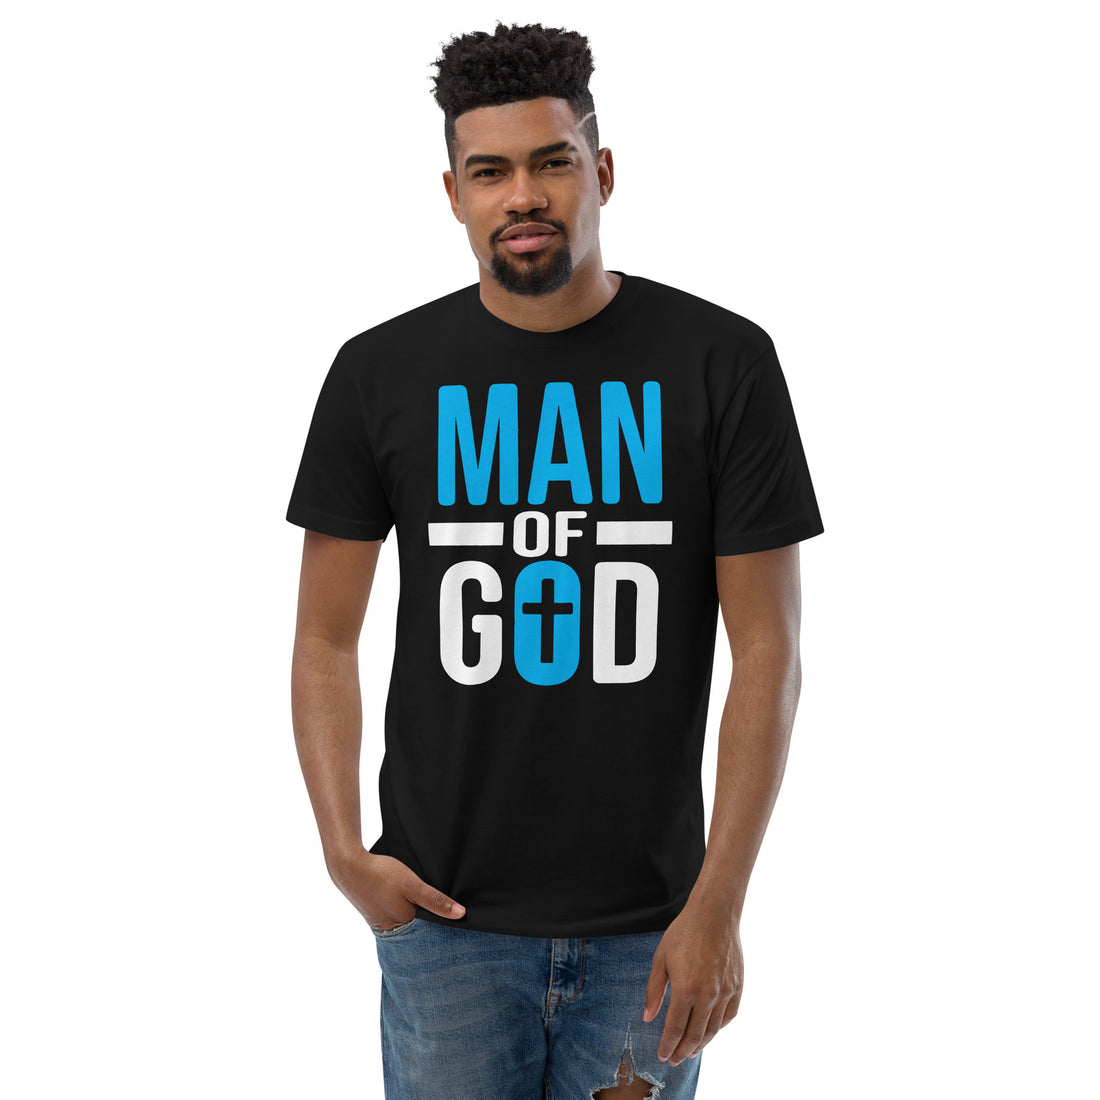 “Man of God” Short Sleeve T-shirt